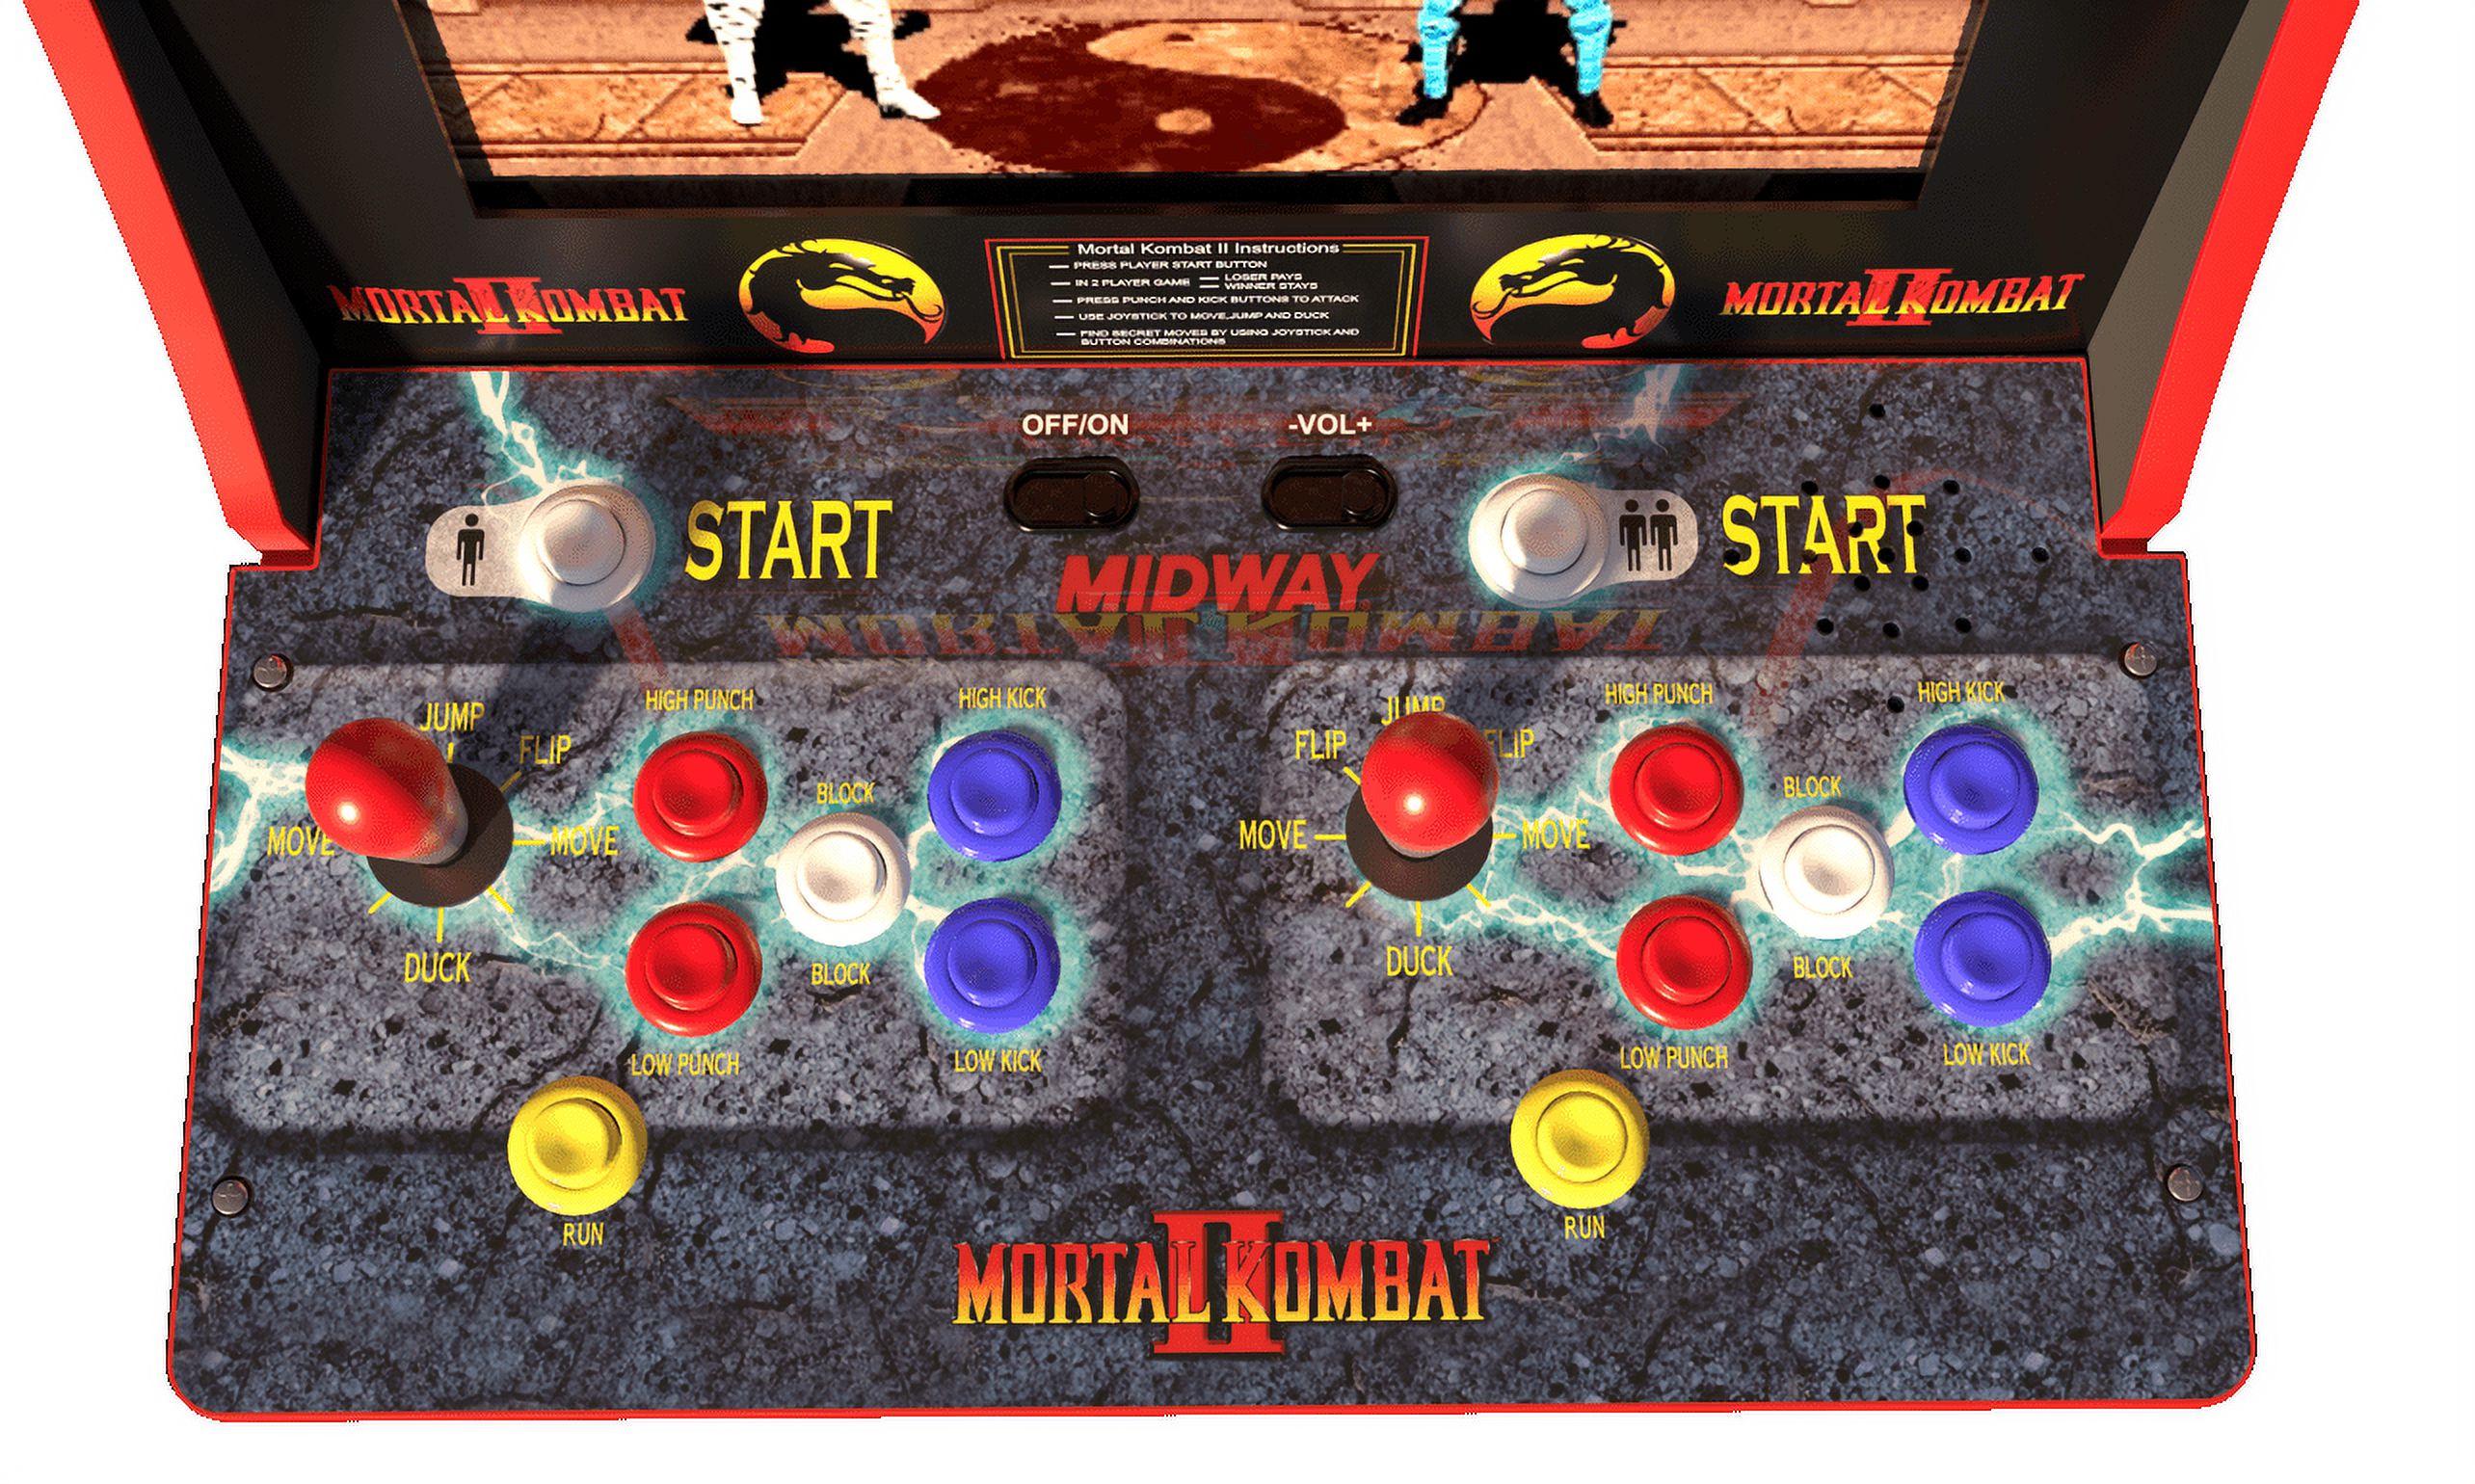 Mortal Kombat Arcade Machine w/ Riser, Arcade1UP (Includes Mortal Kombat I, II, III) - image 4 of 5